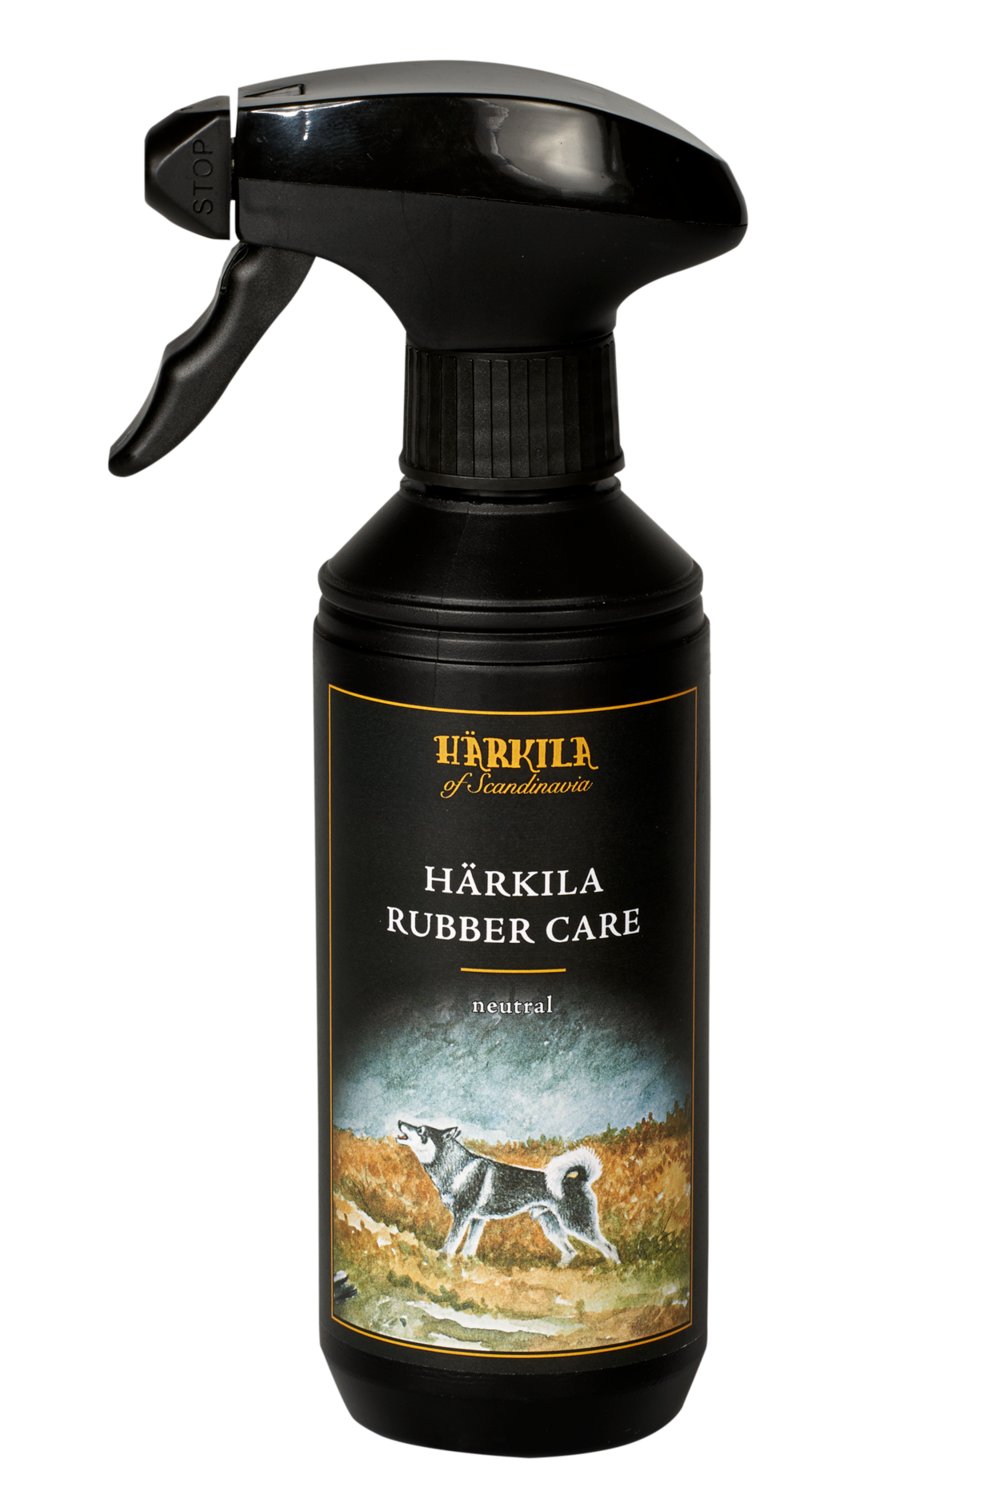 Harkila Rubber care 250ml